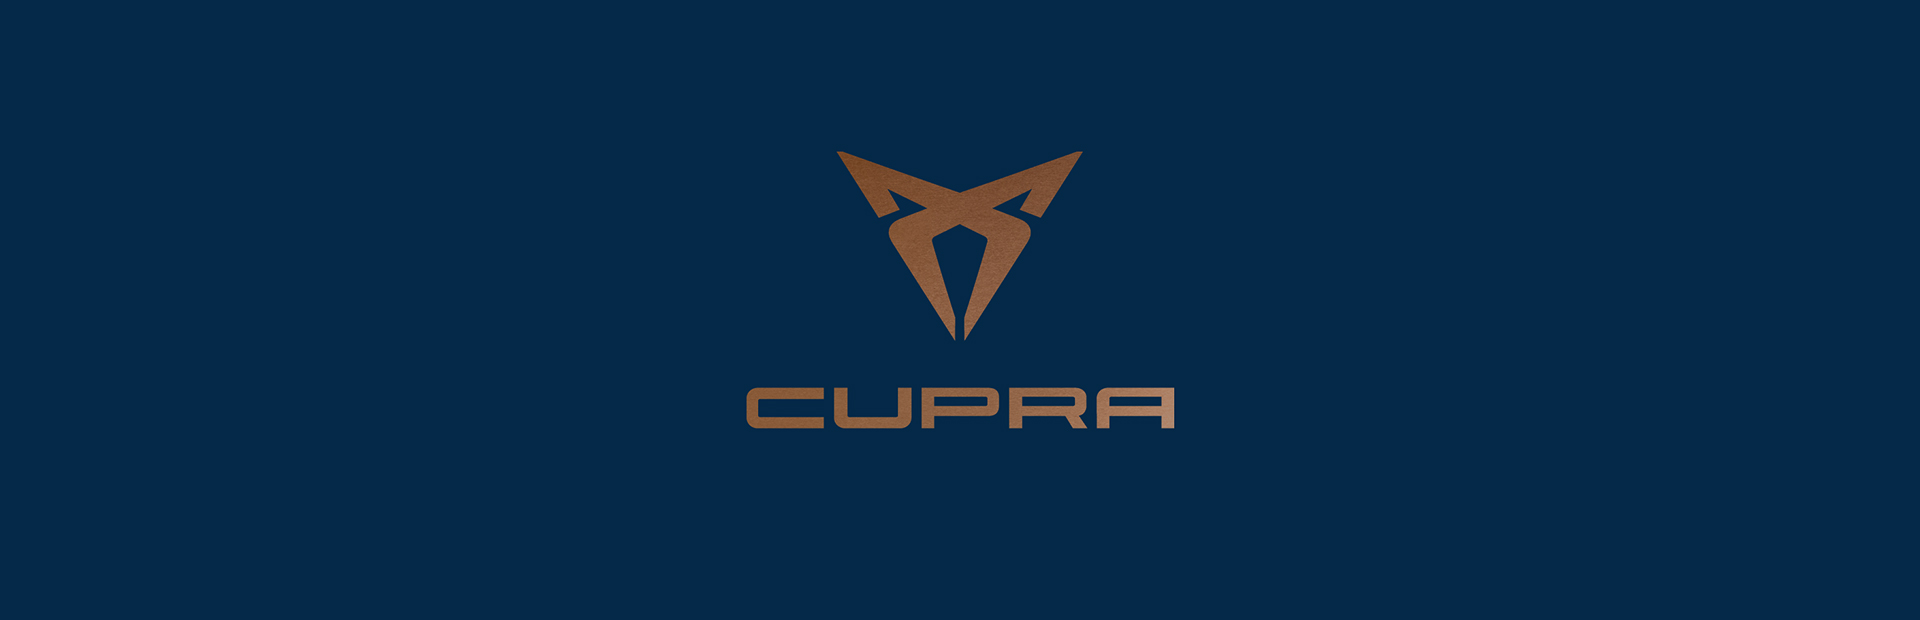 CUPRA - logo